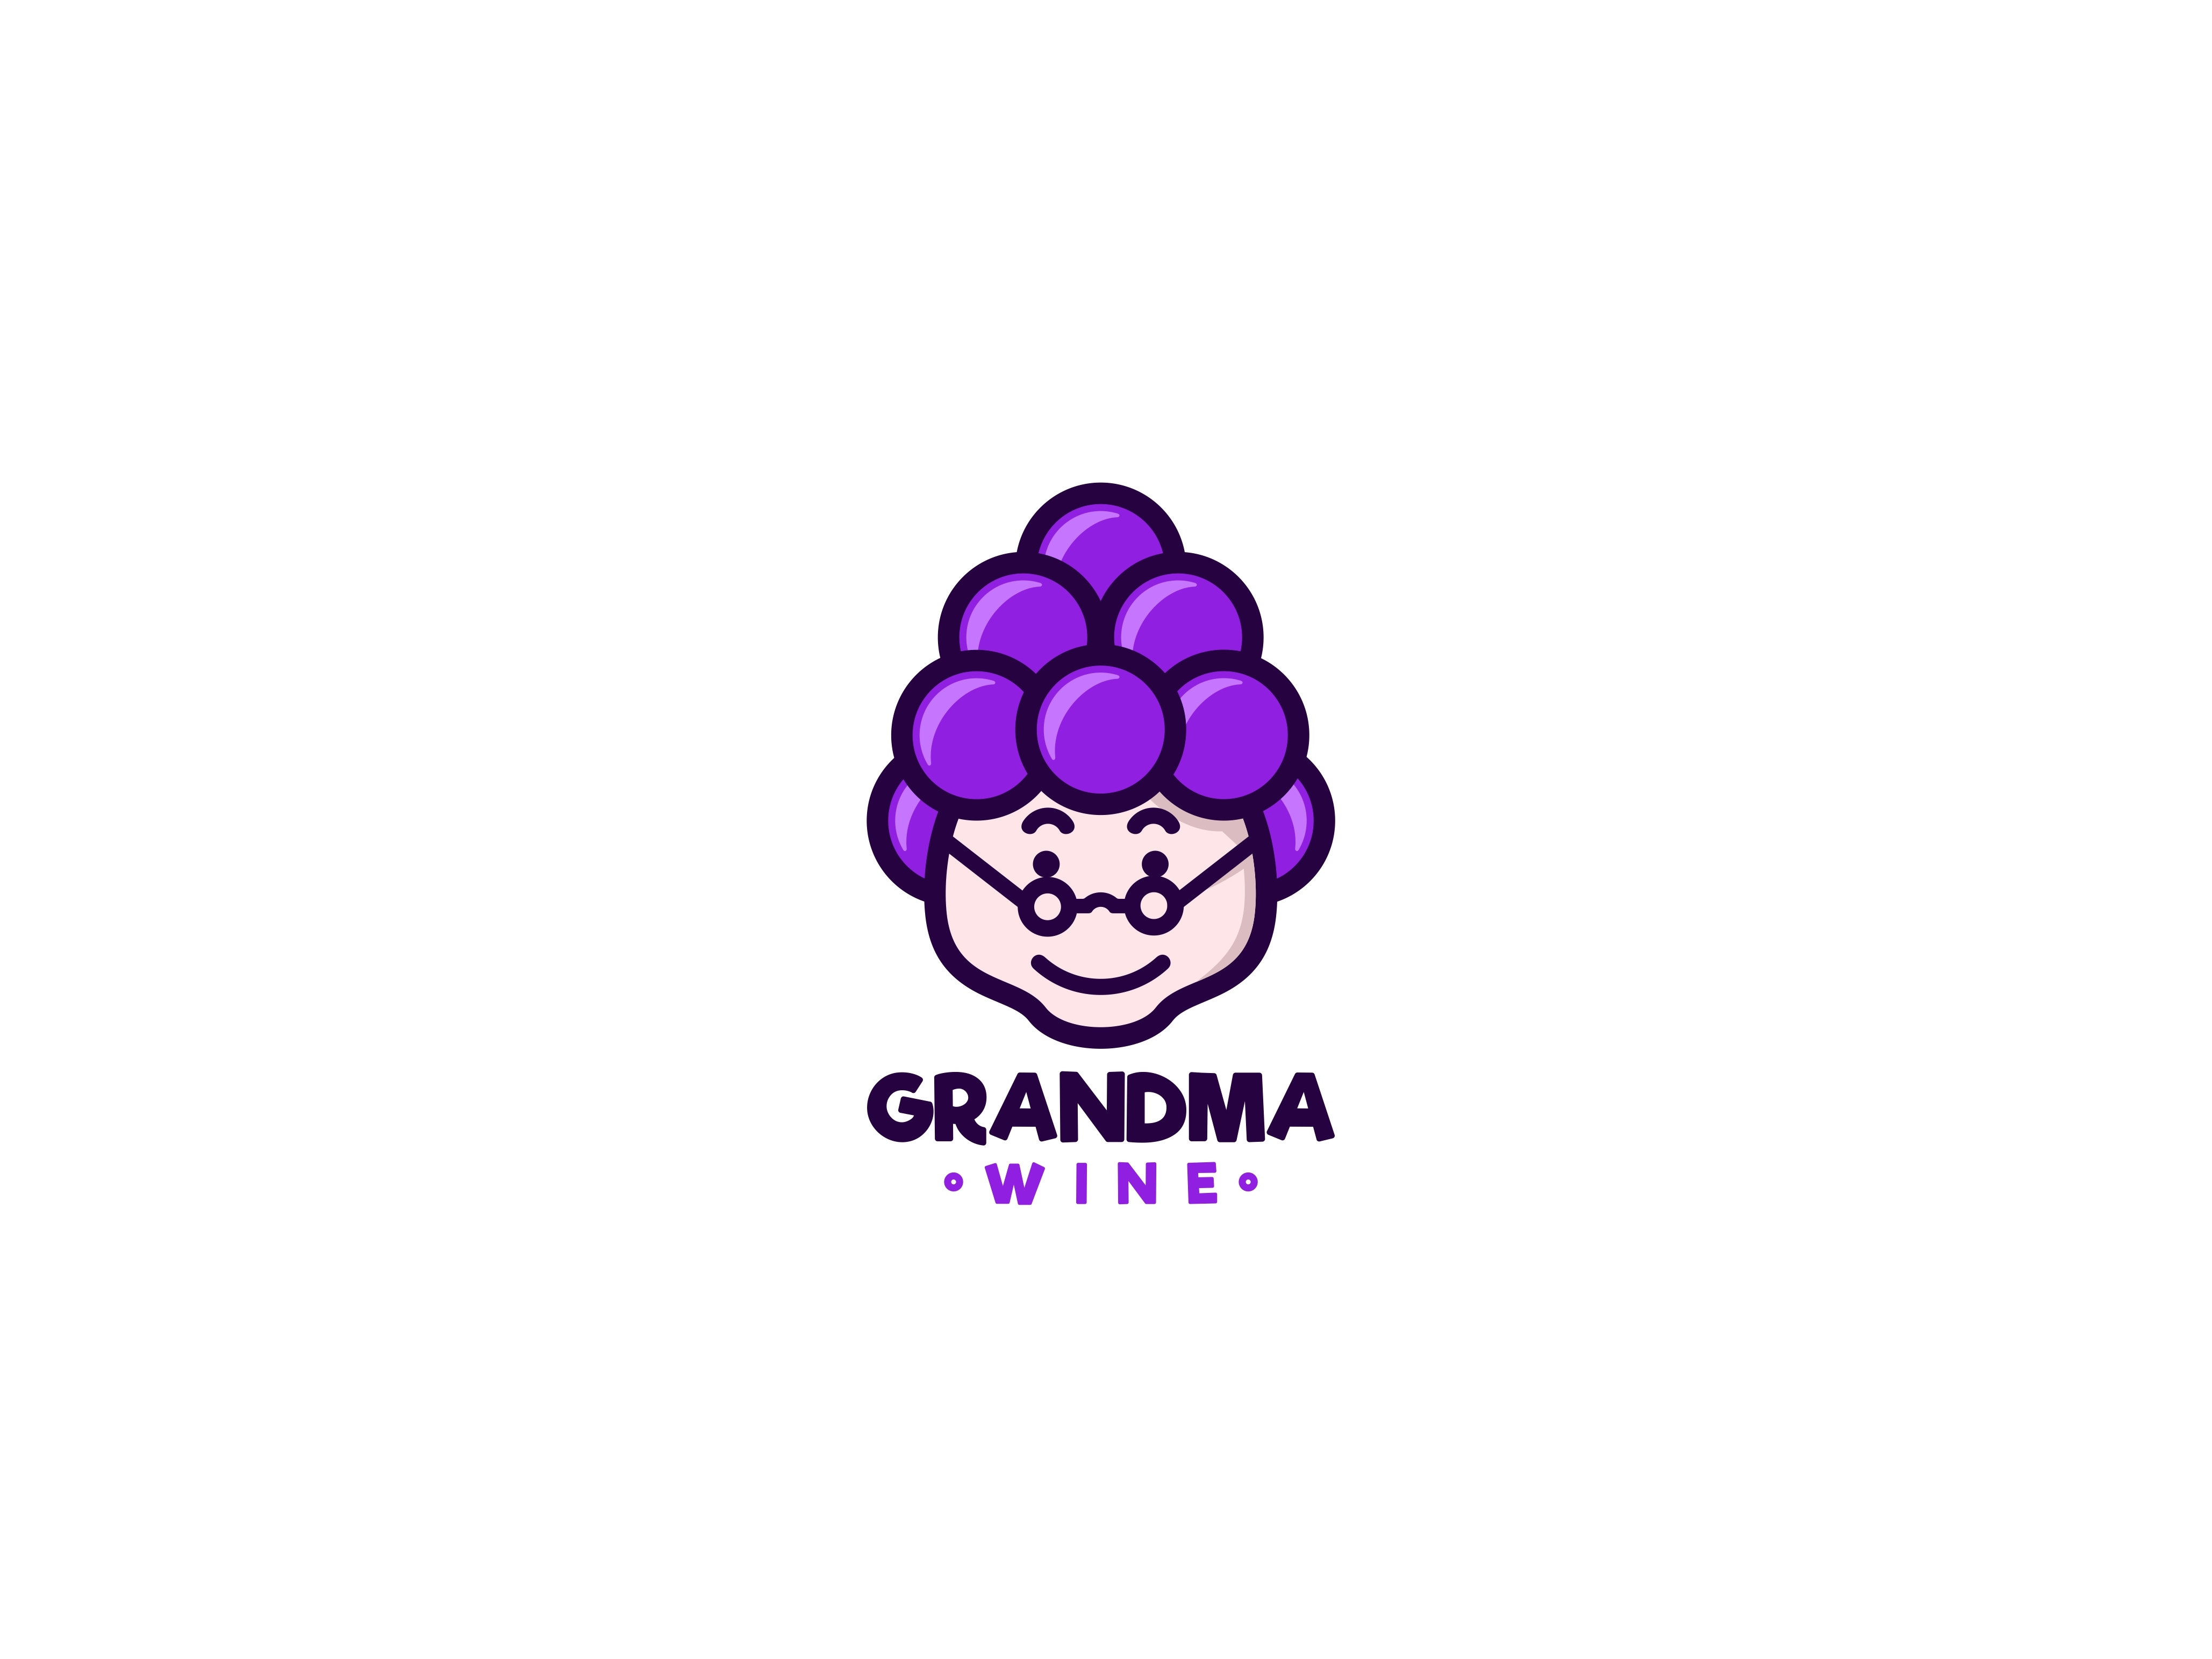 Grandma Wine by Taufik Rizky  A taufikrizkyy on Dribbble